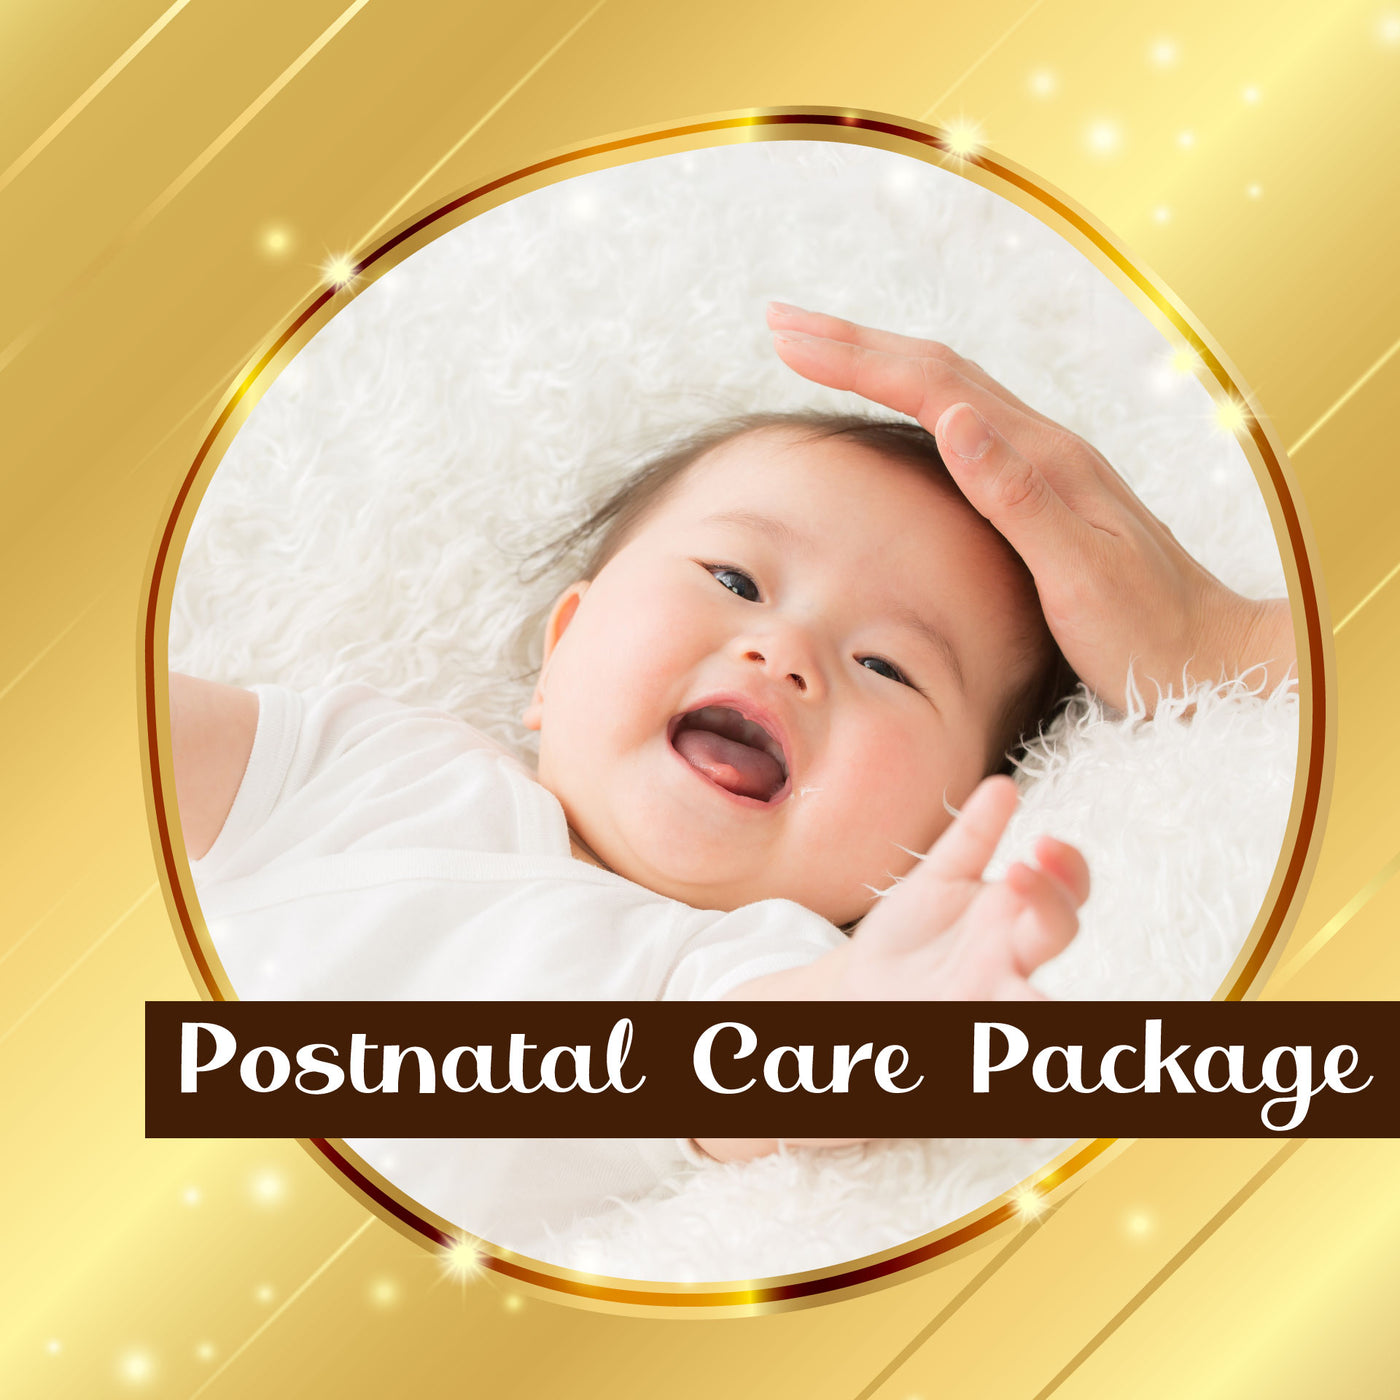 Postnatal Care Package